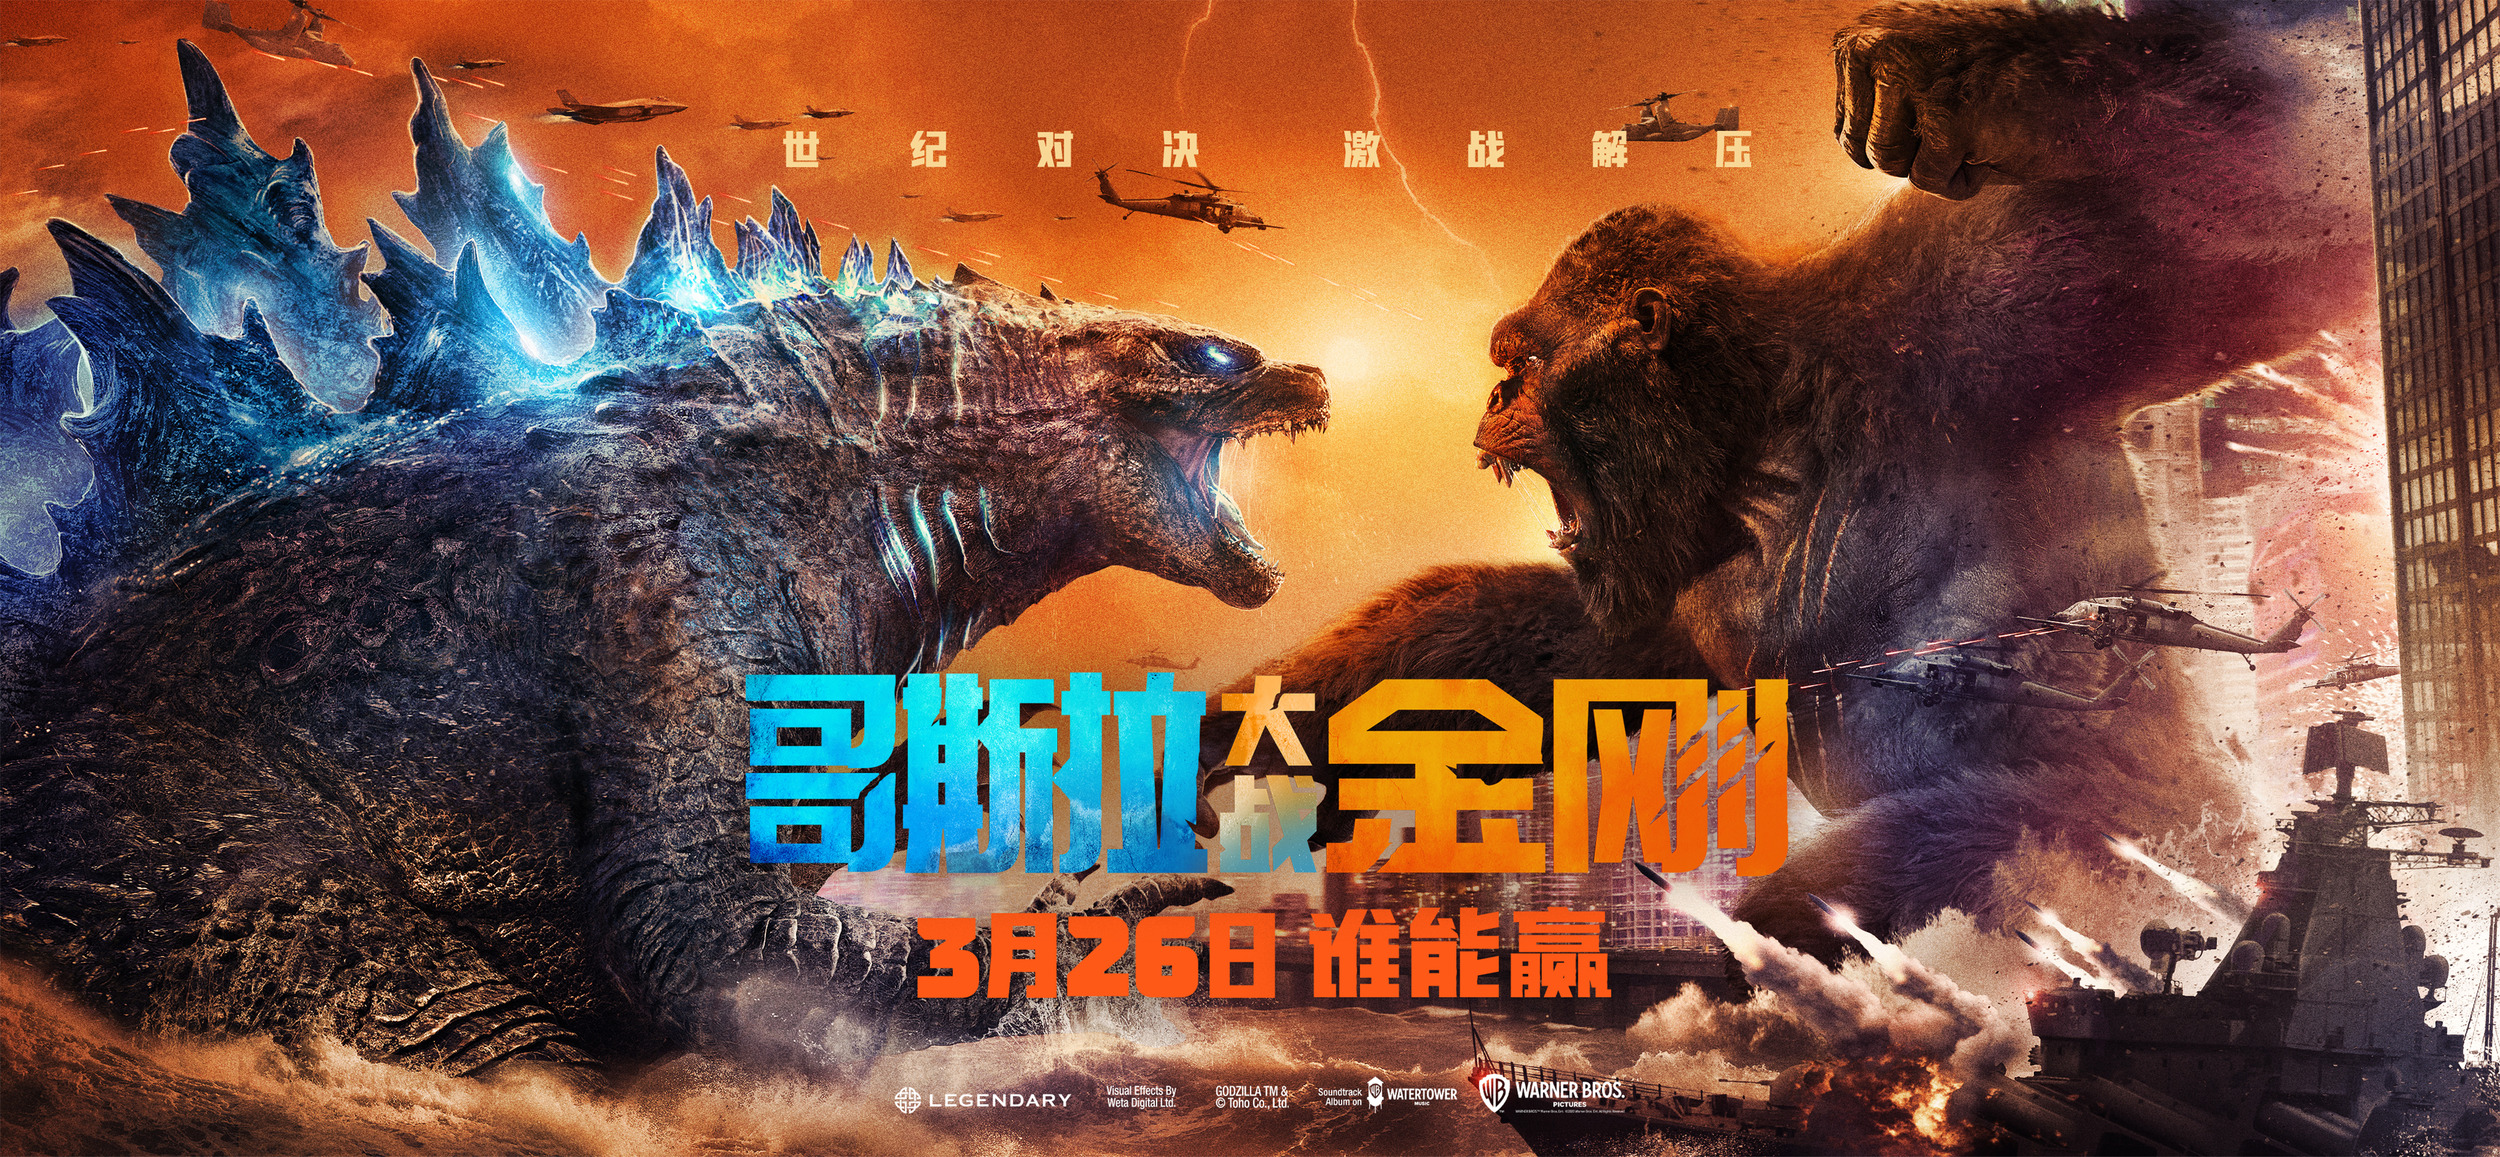 Mega Sized Movie Poster Image for Godzilla vs. Kong (#5 of 20)